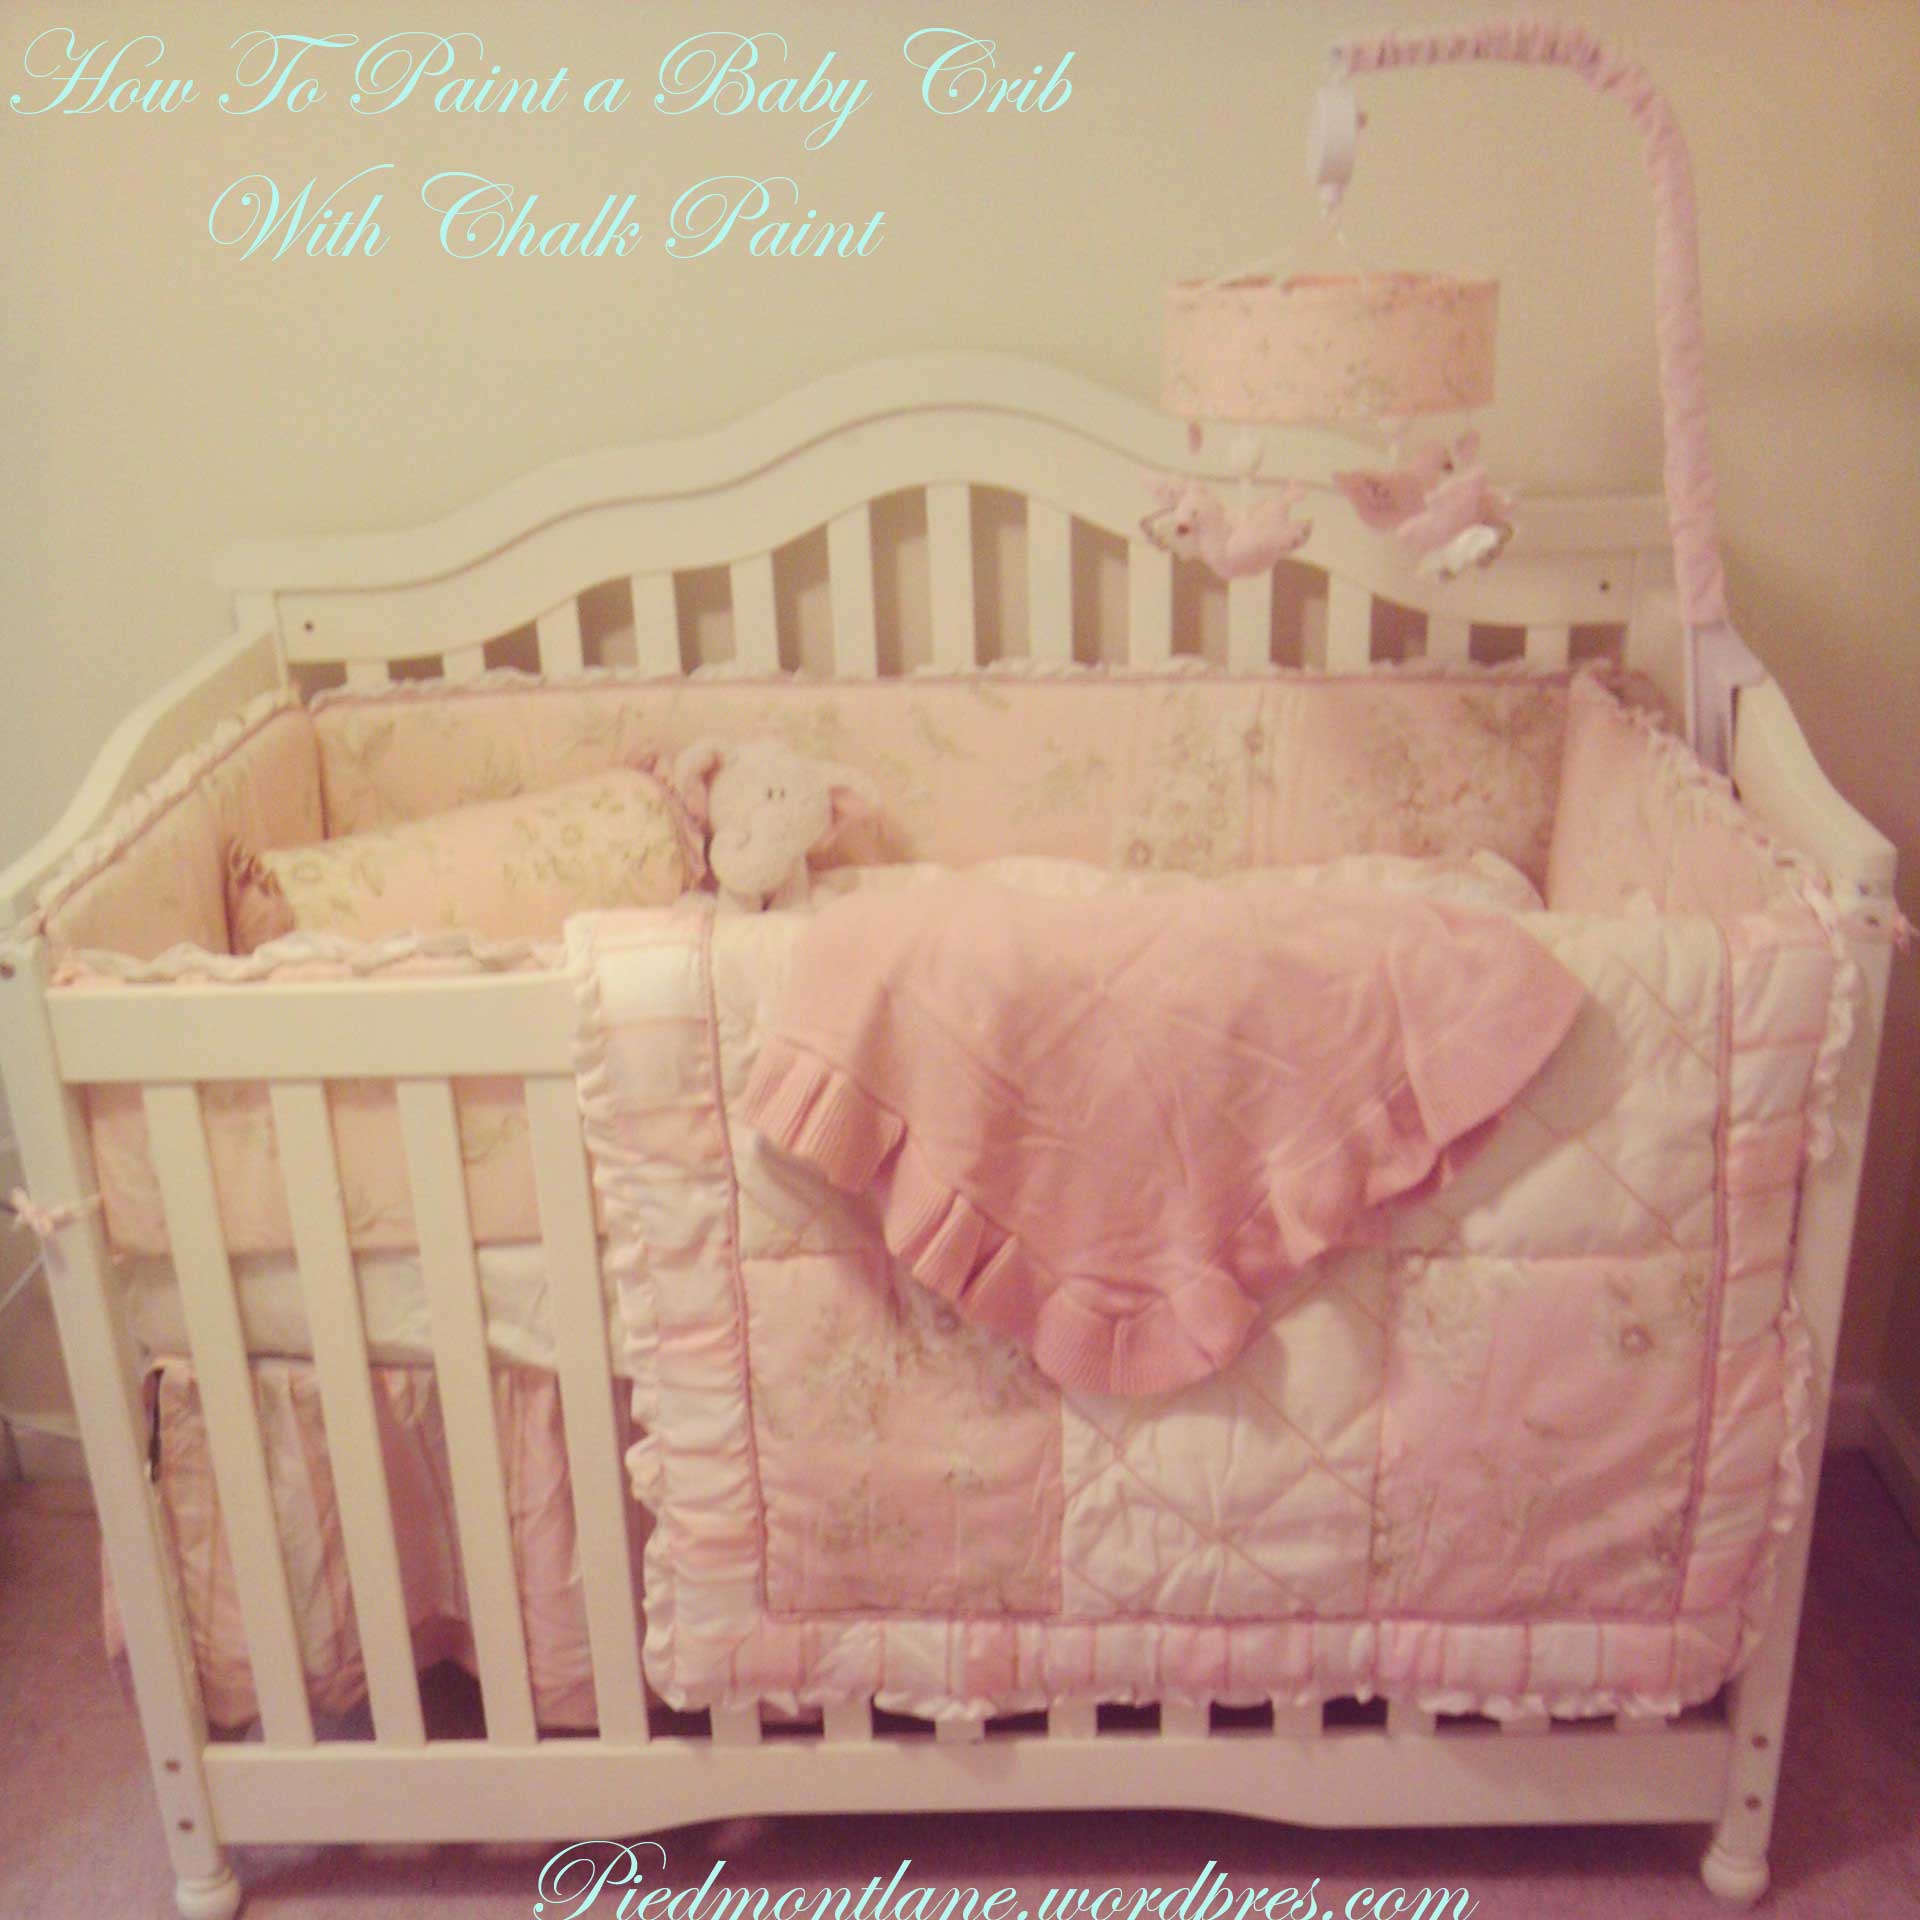 white cribs for baby girl